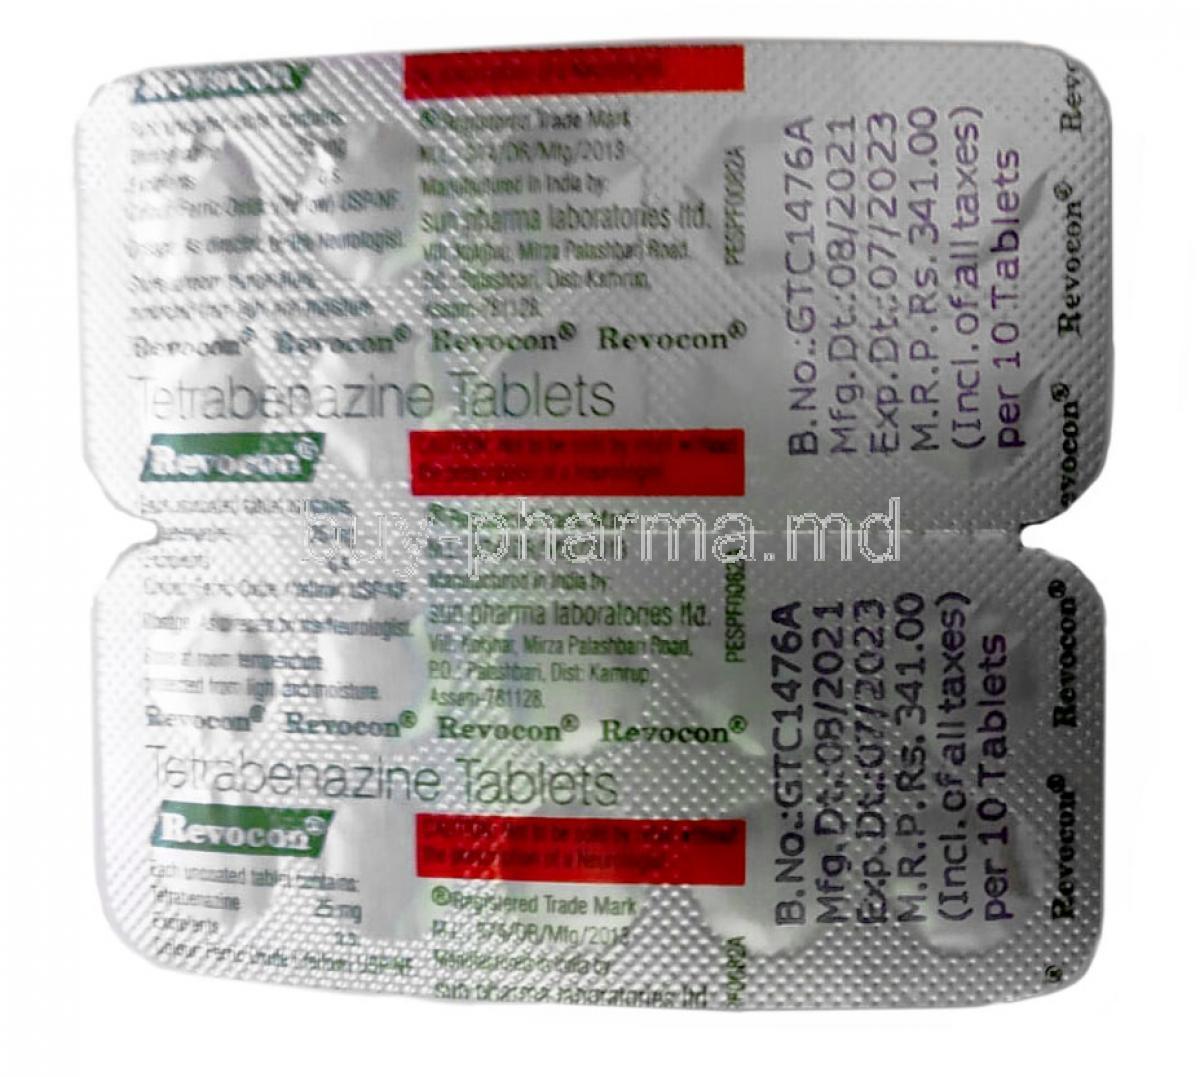 Revocon, Tetrabenazine 25 mg, Sun Pharma, Blisterpack information